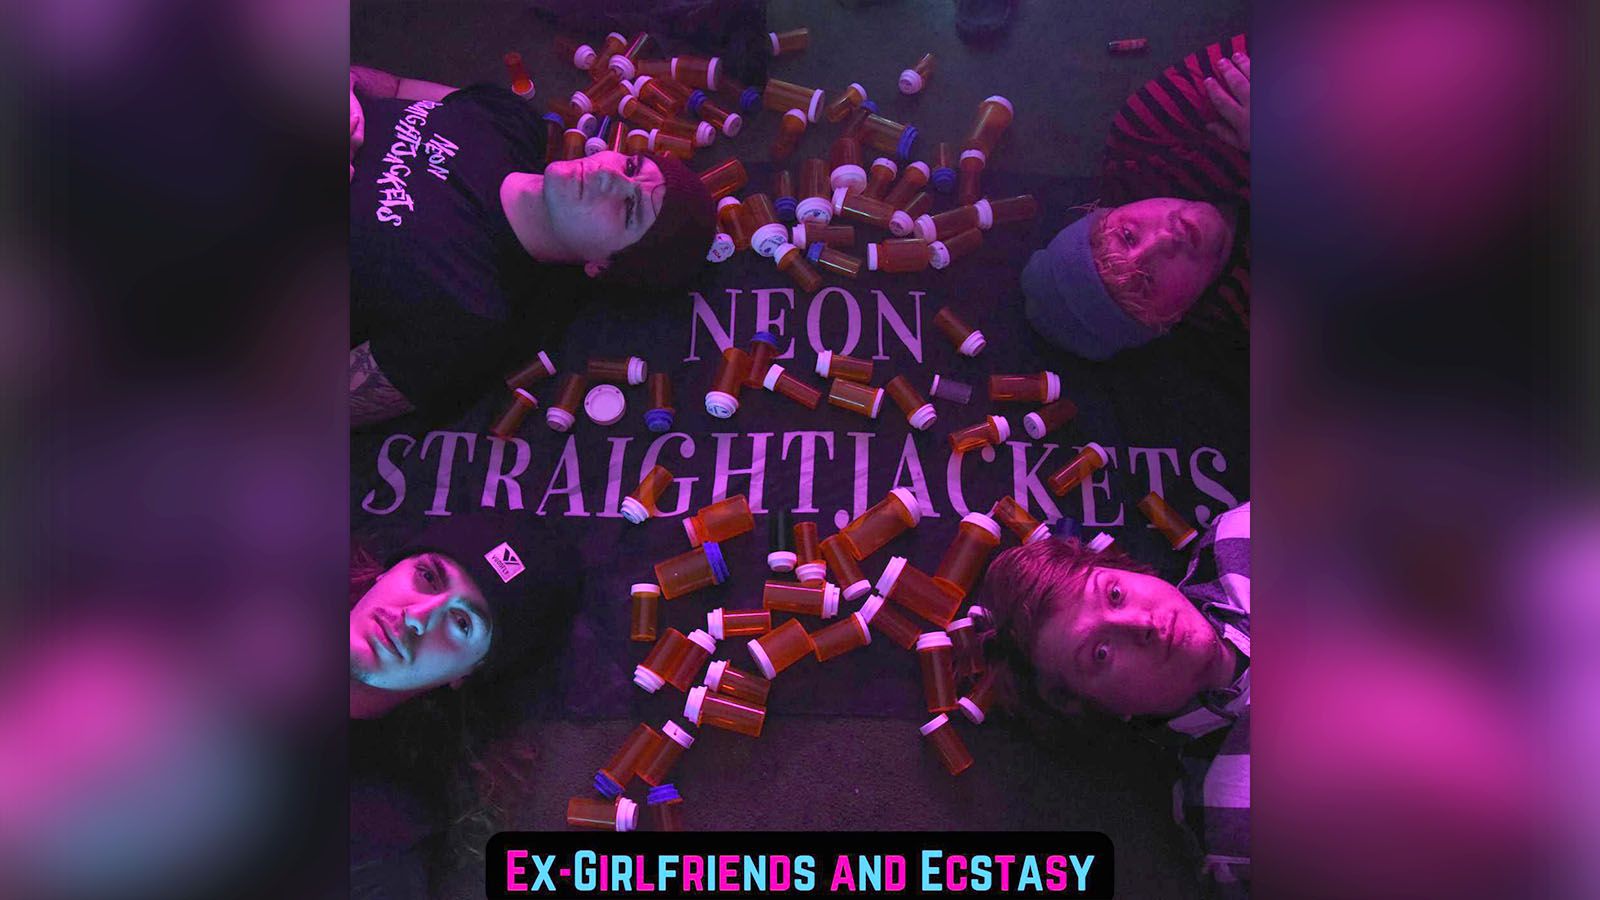 Neon Straightjackets' debut album is full of energy.